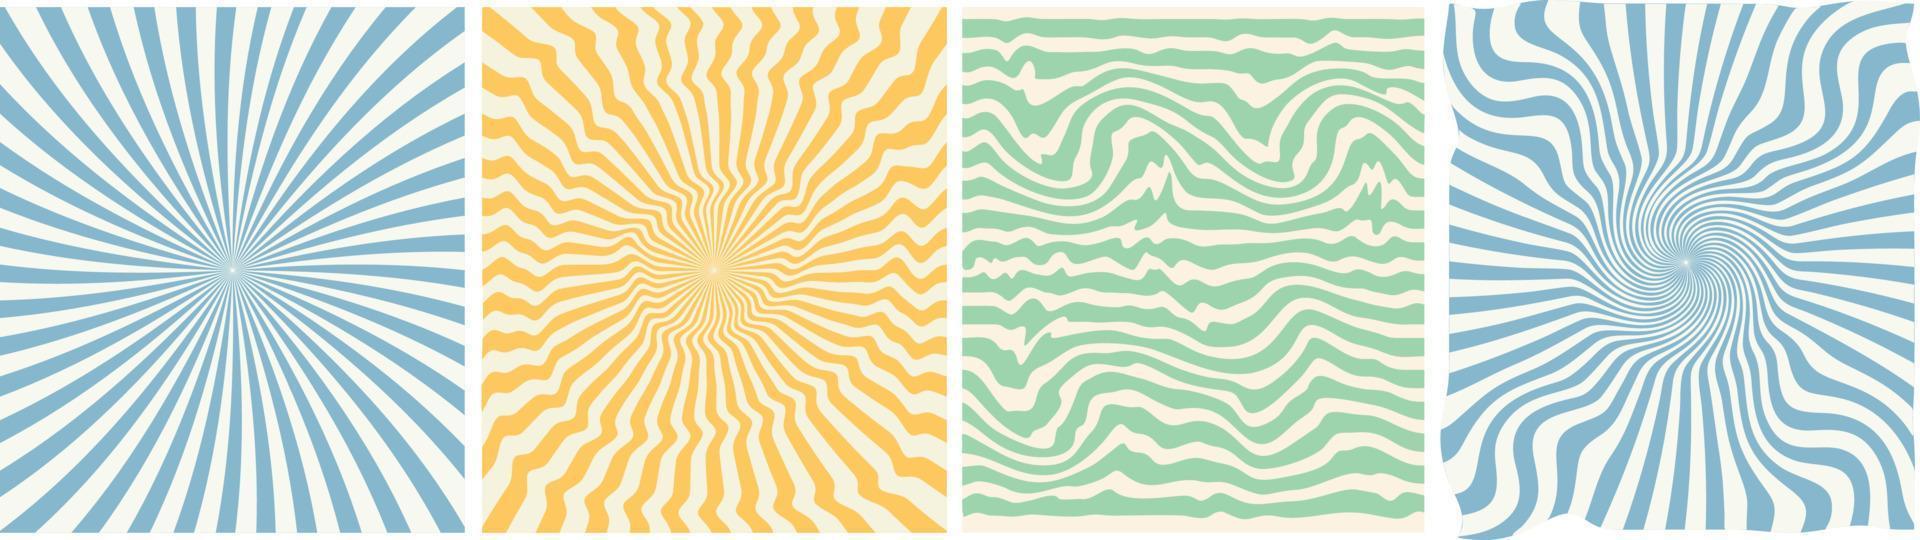 Waves, swirl, twirl pattern background vector illustrations